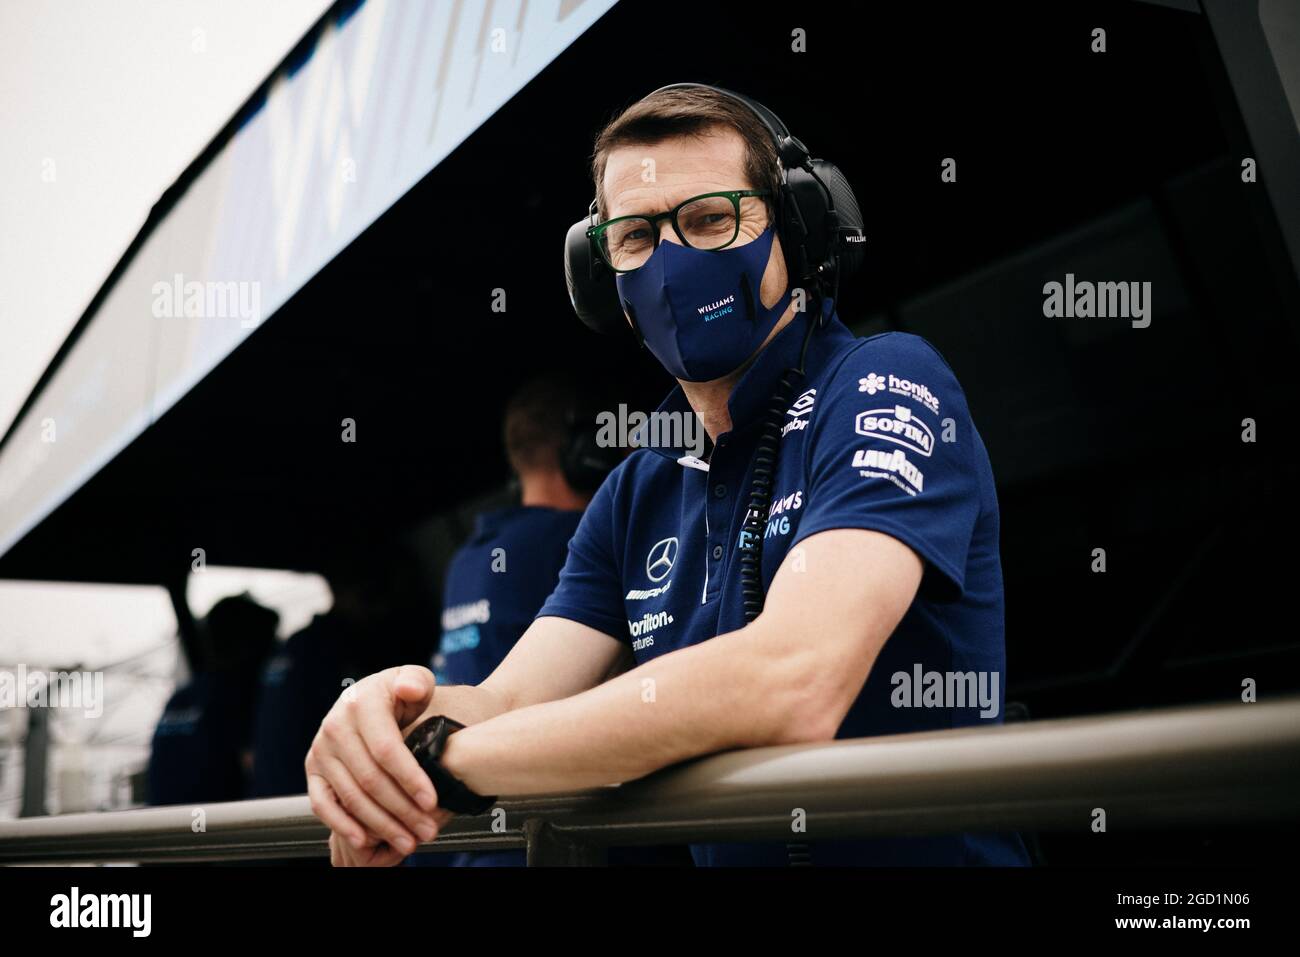 FX Demaison (FRA) Williams Racing Technical Director. Großer Preis von Frankreich, Samstag, 19. Juni 2021. Paul Ricard, Frankreich. Stockfoto